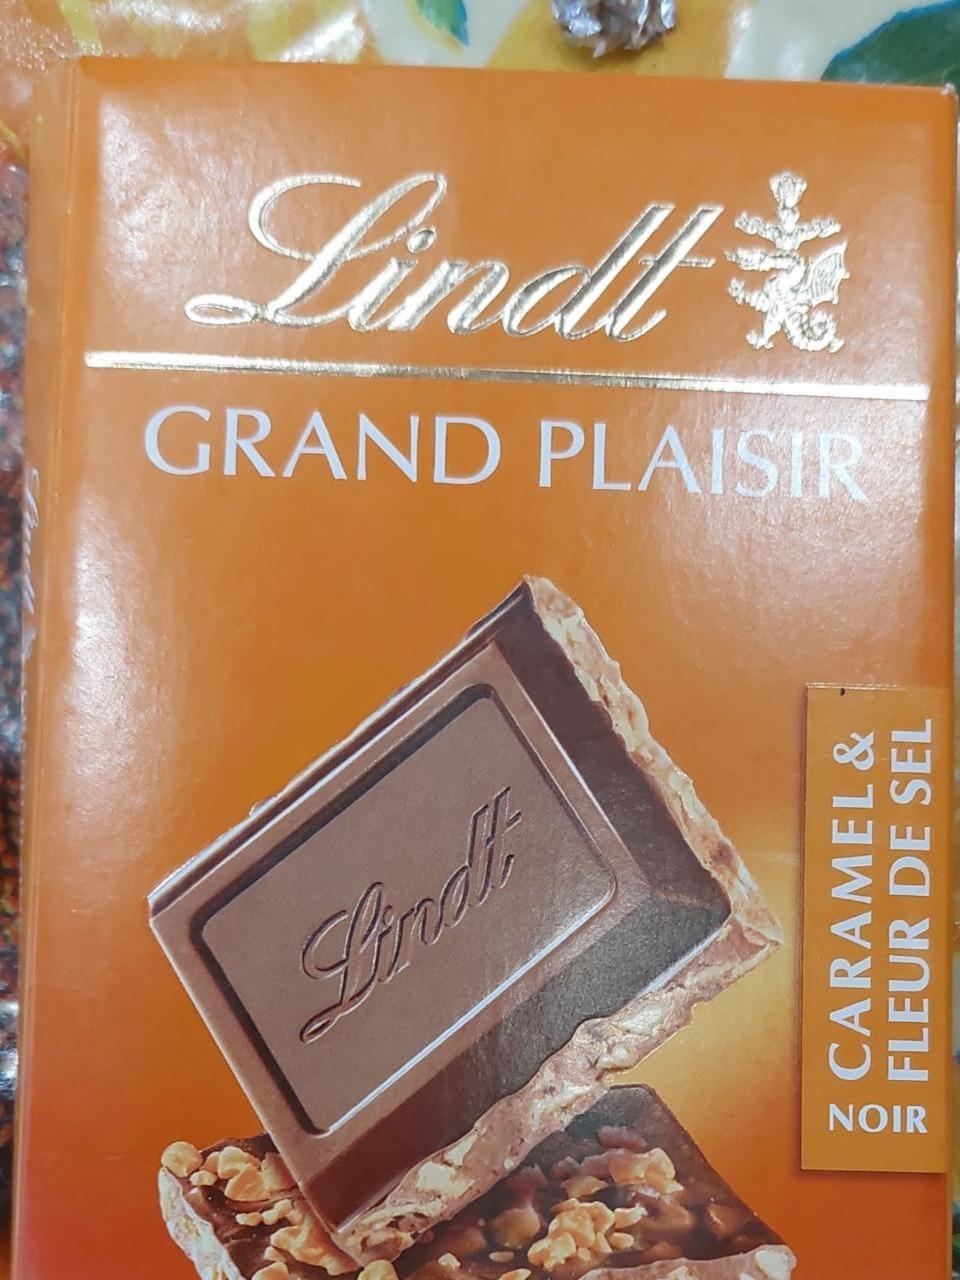 Фото - Шоколад темний Grand Plaisir Caramel Lindt